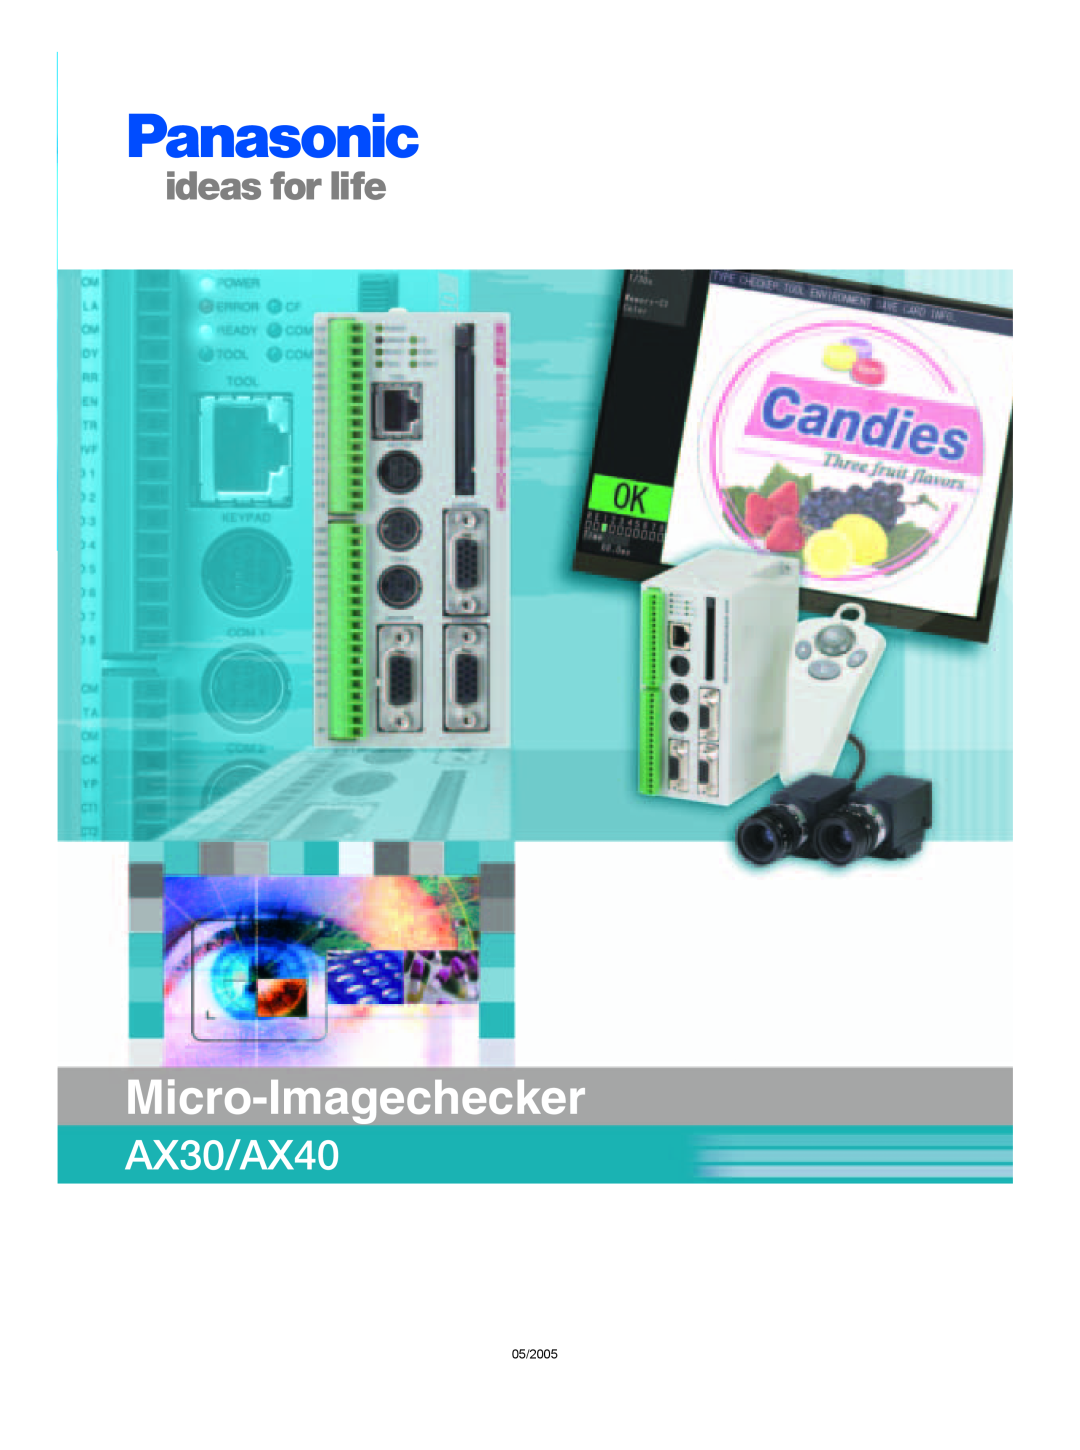 Panasonic manual Micro-Imagechecker, AX30/AX40, 05/2005 